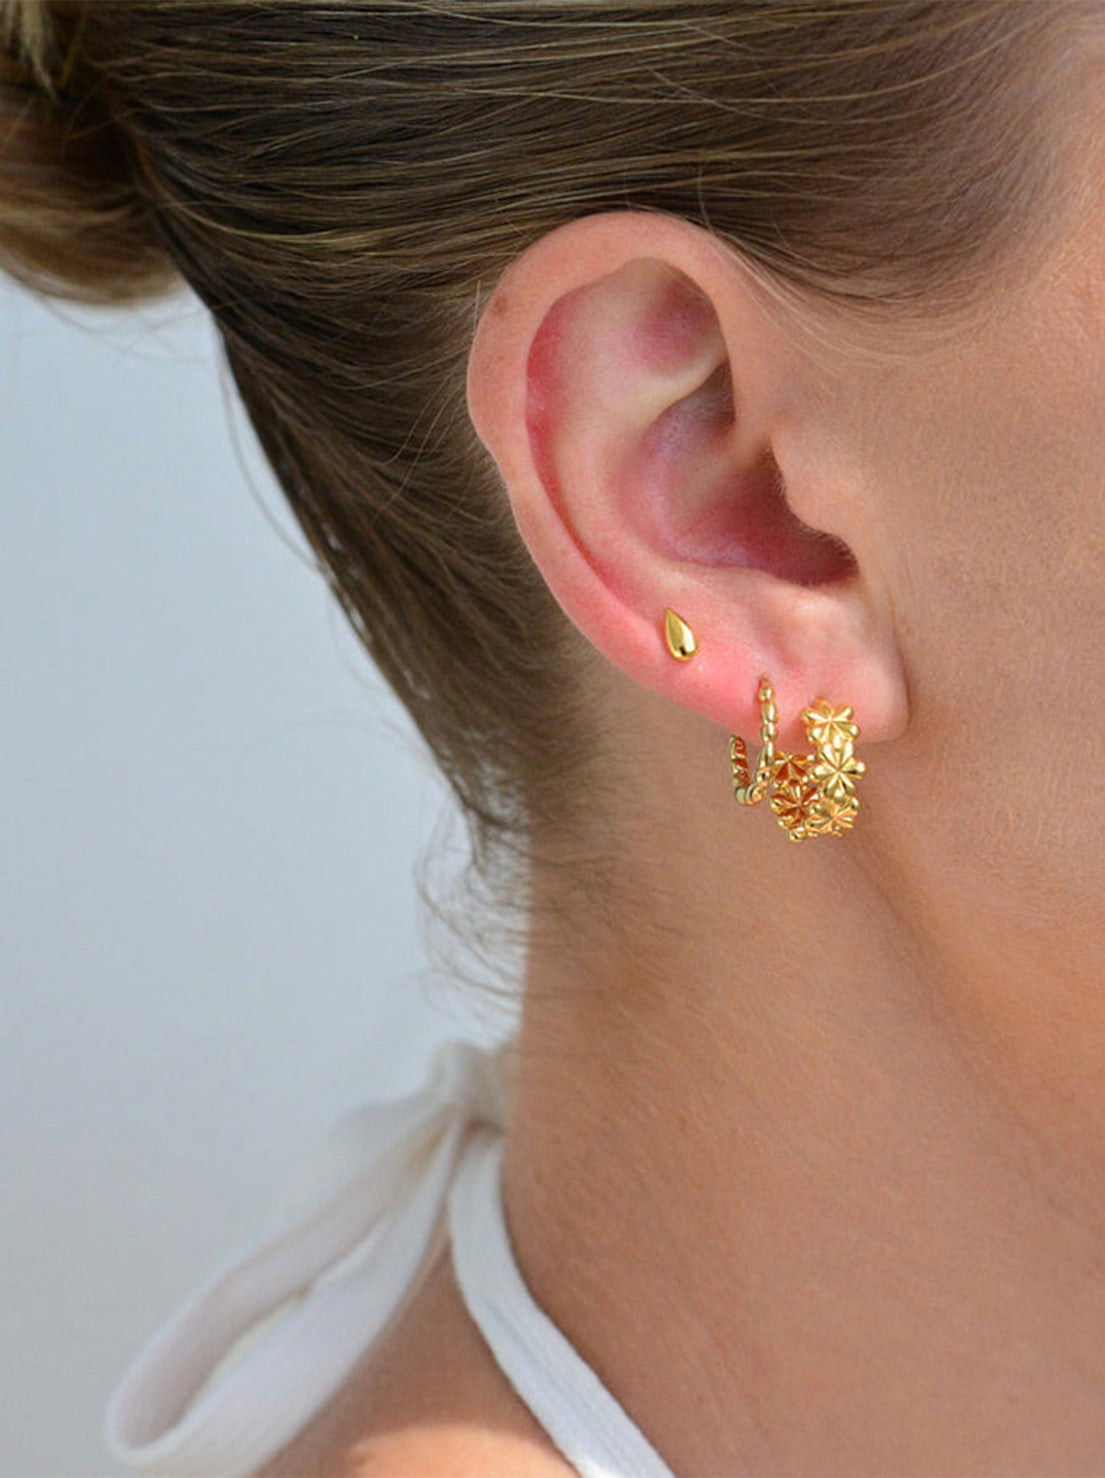 Linda Tahija - Petal Stud Earrings - Gold Plated